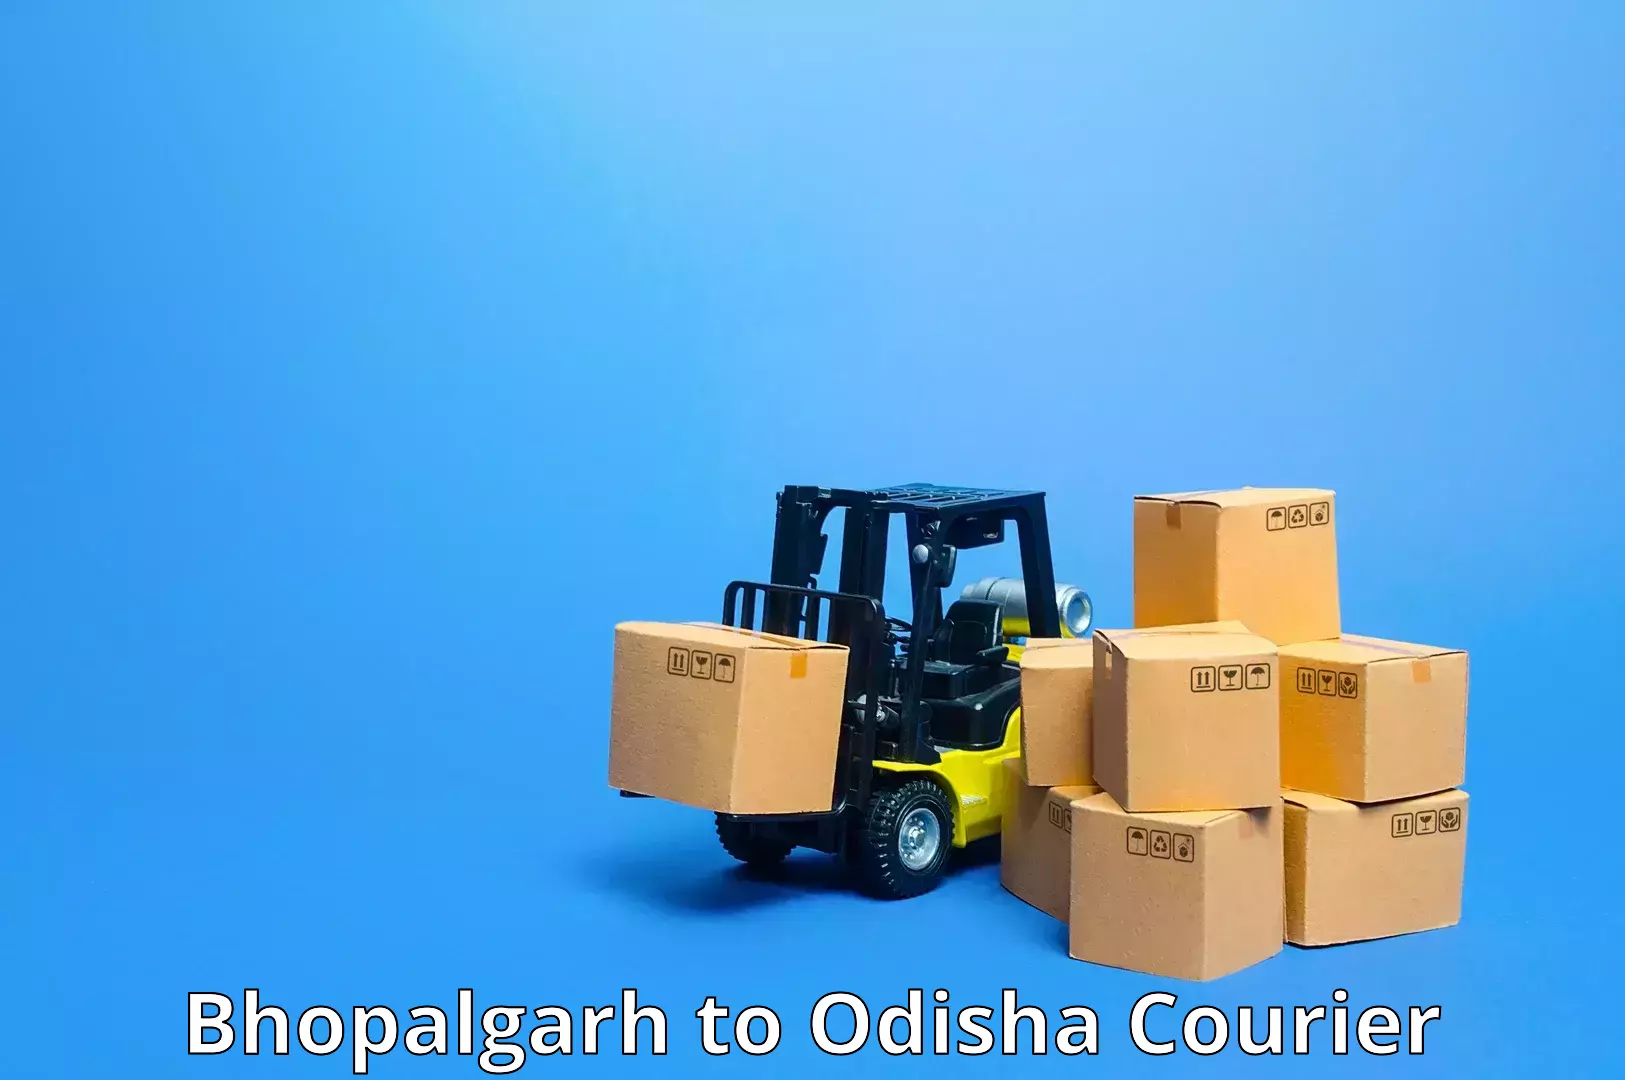 State-of-the-art courier technology Bhopalgarh to Odisha